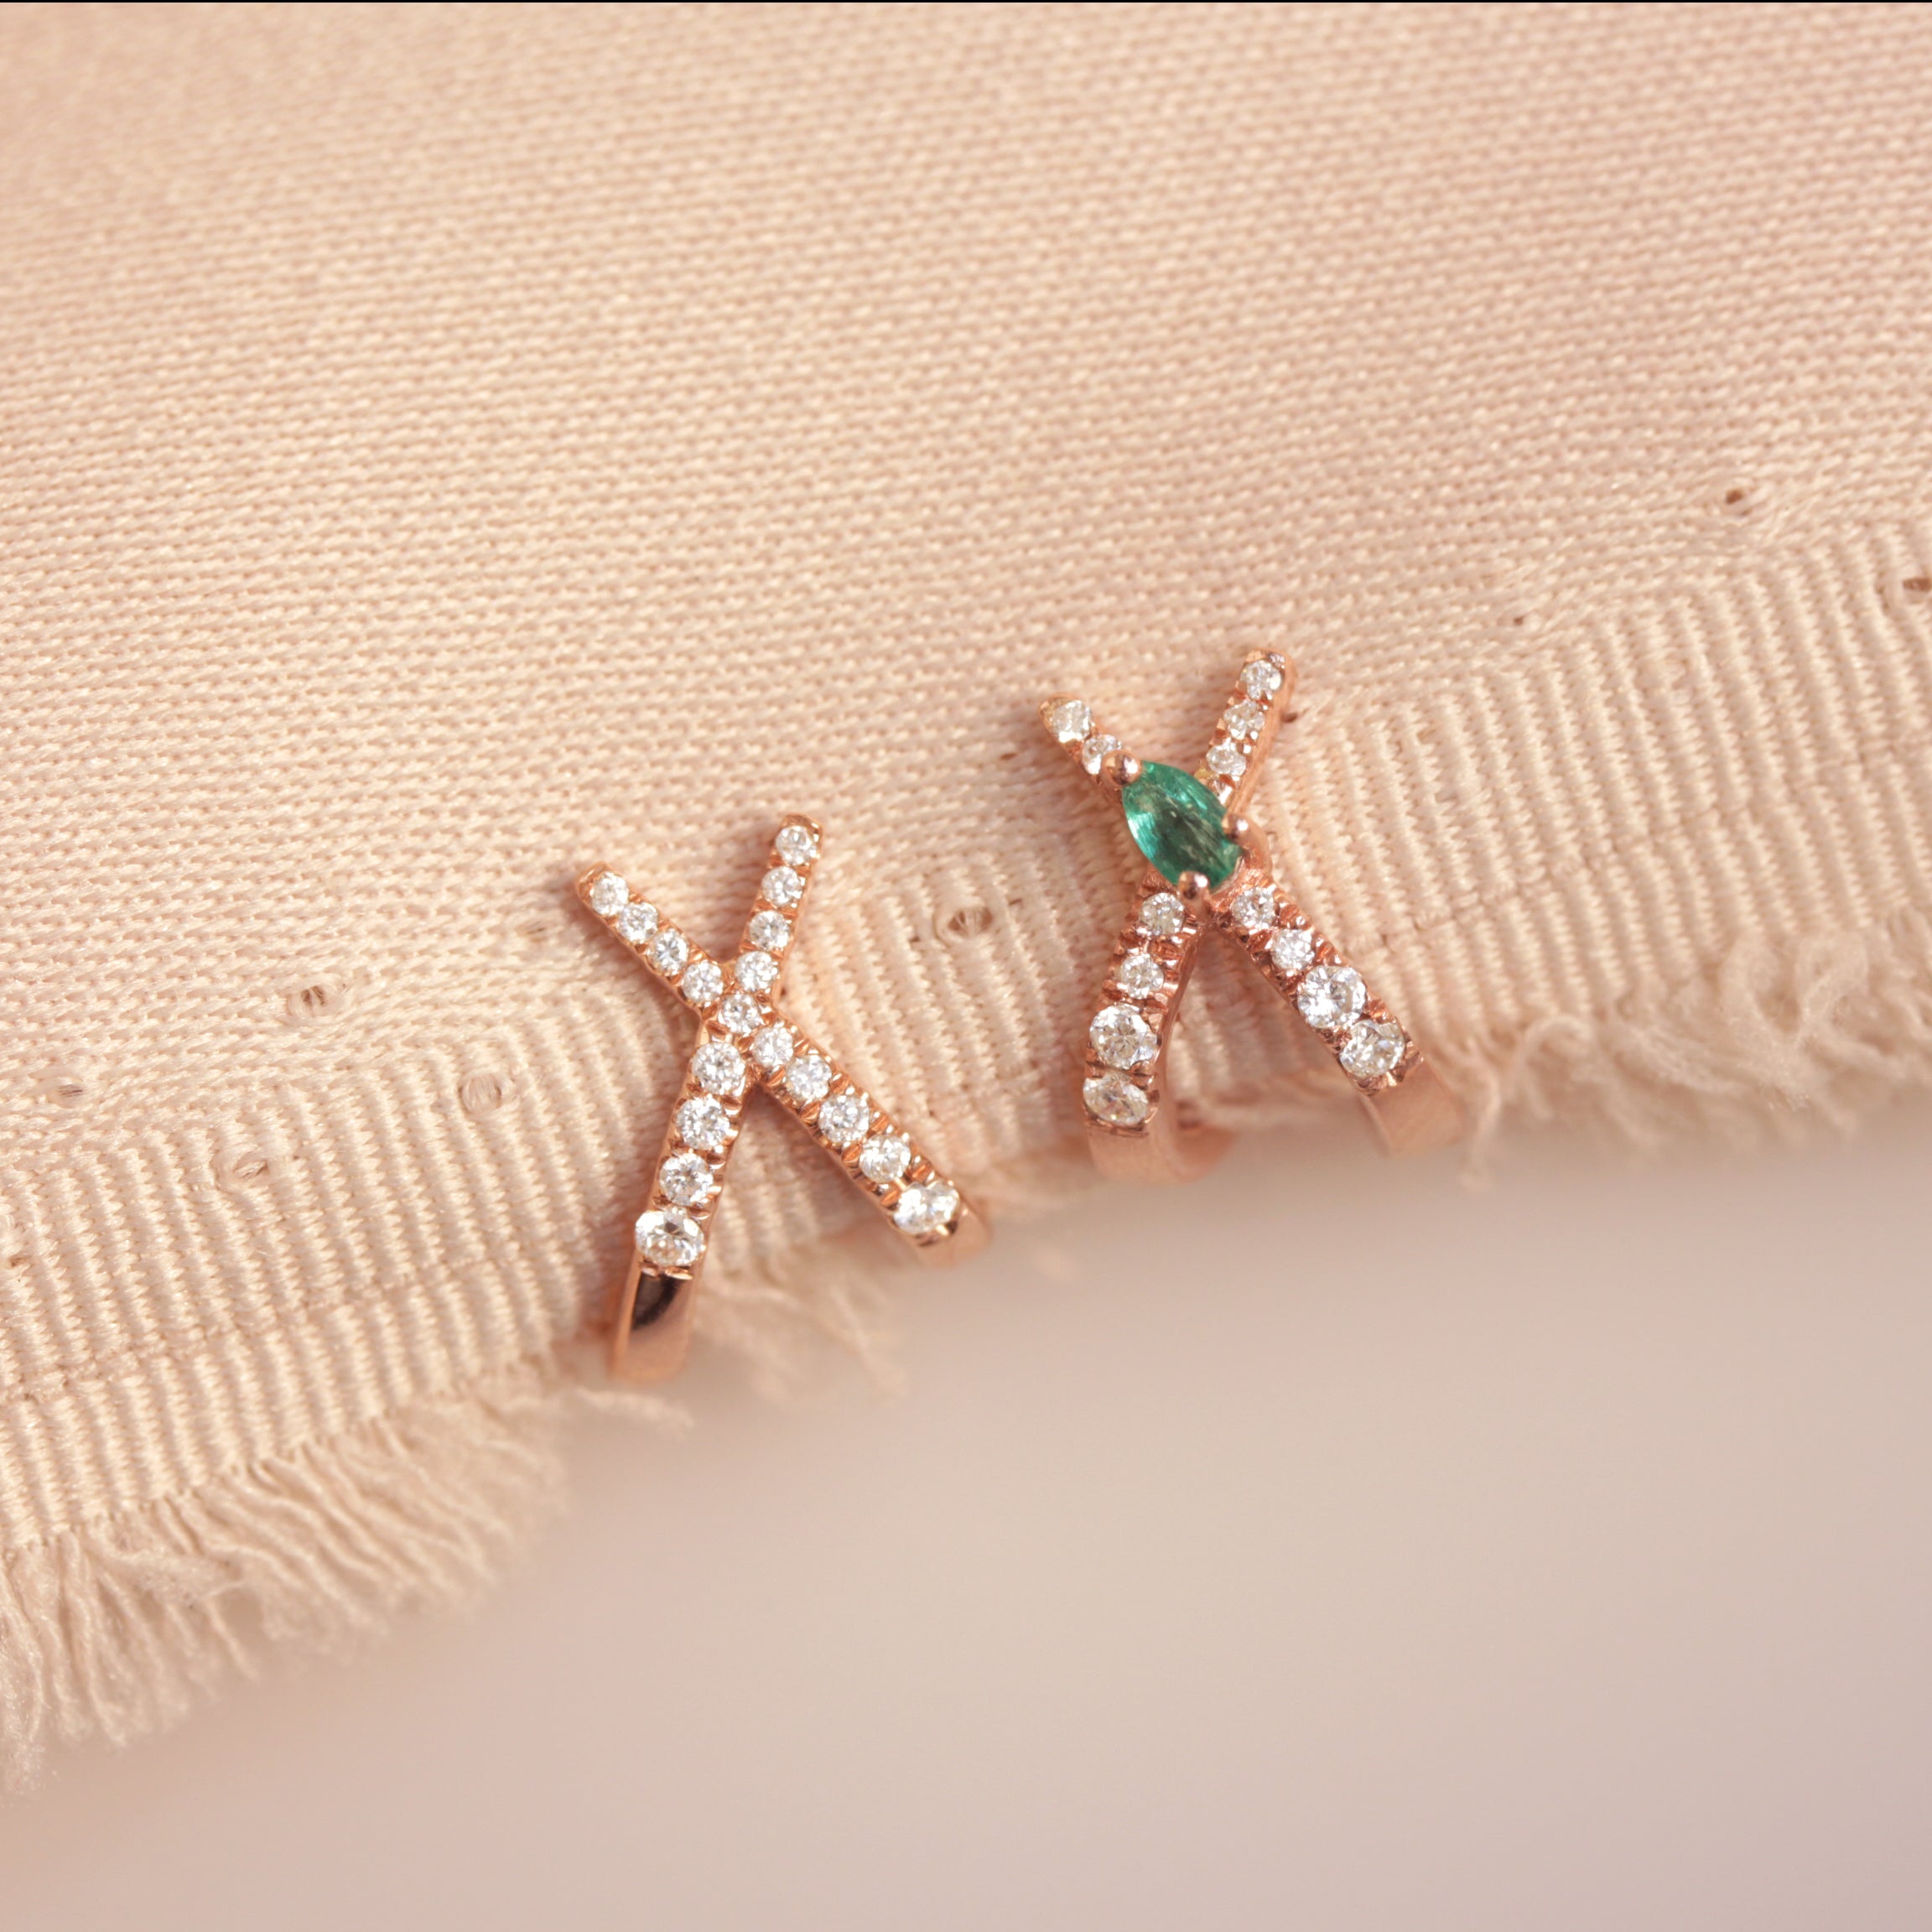 X Huggie Diamond Earrings with Pear-Shaped Emerald